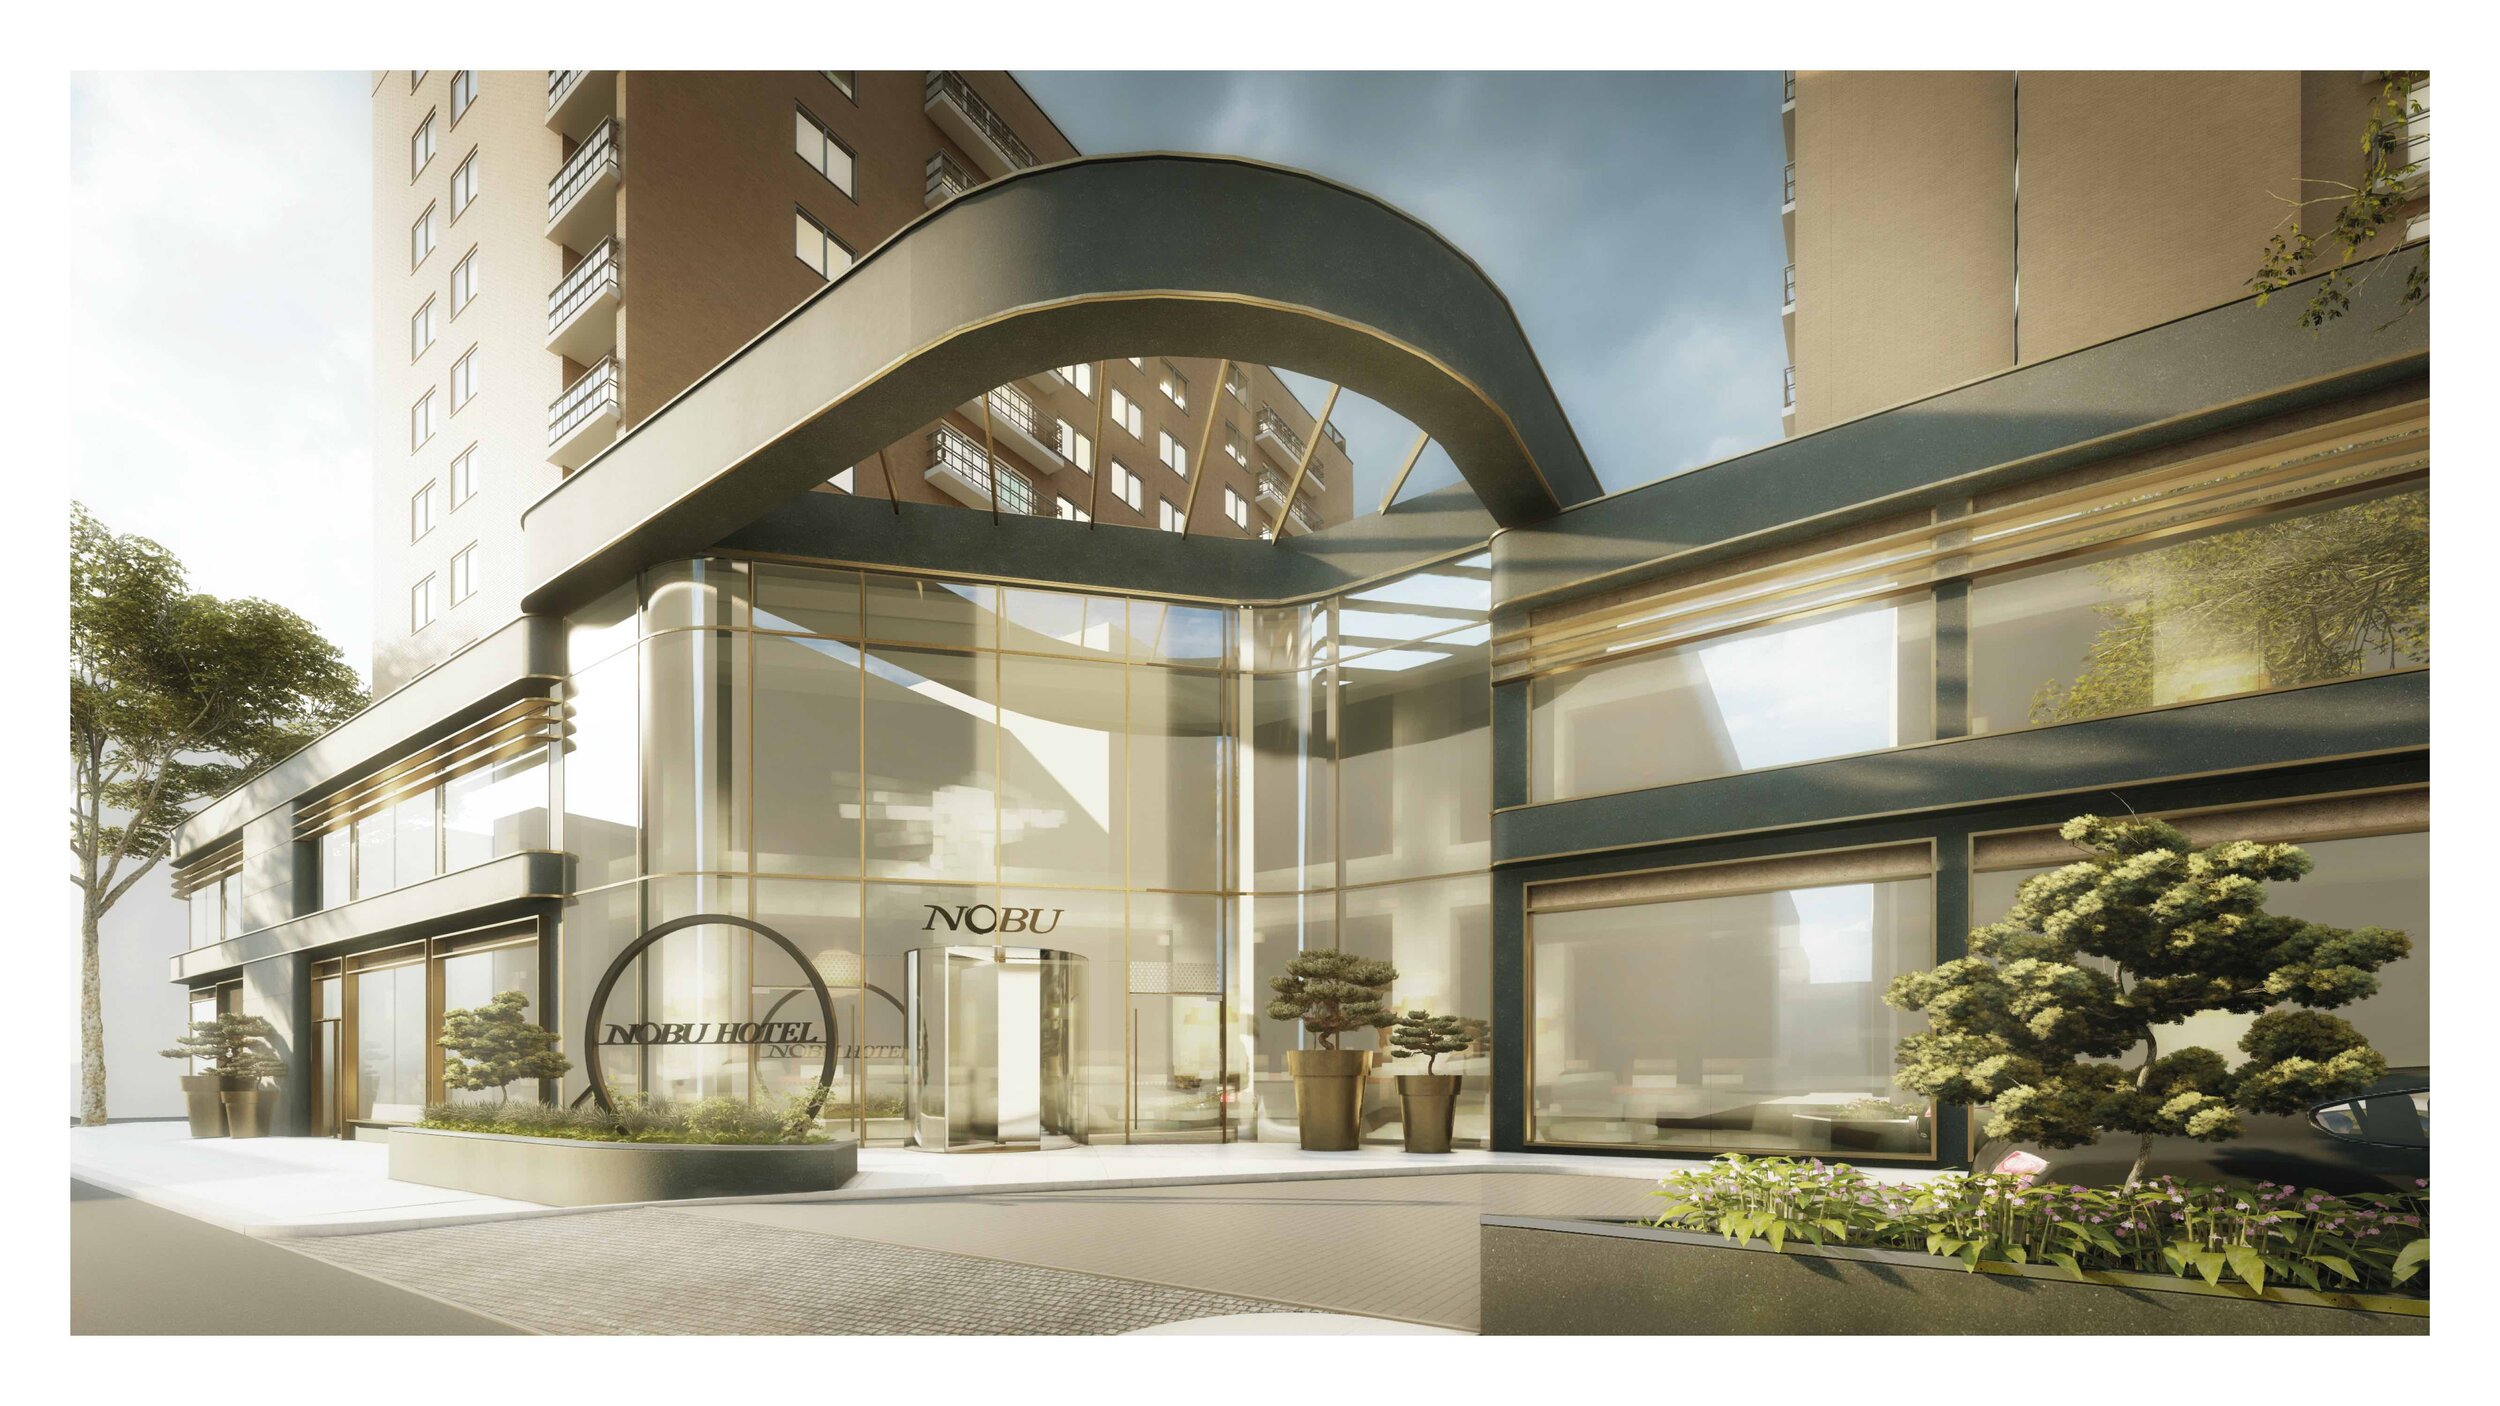 Nobu Ryokan Hotel / Studio PCH, - Architecture & Design